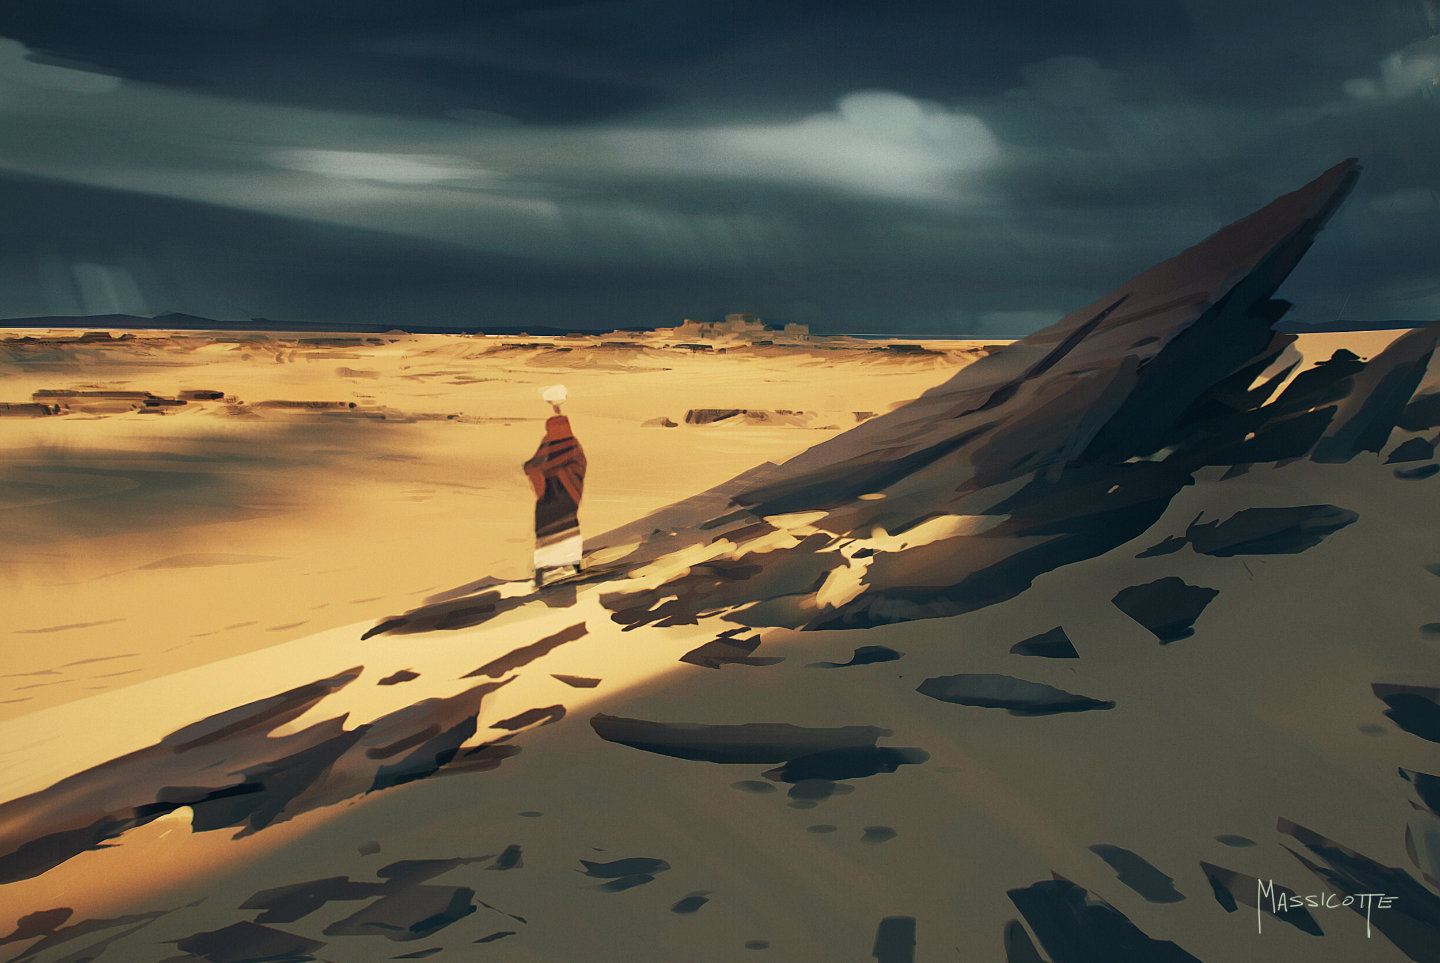 The Endless Desert by Brennan Massicotte.